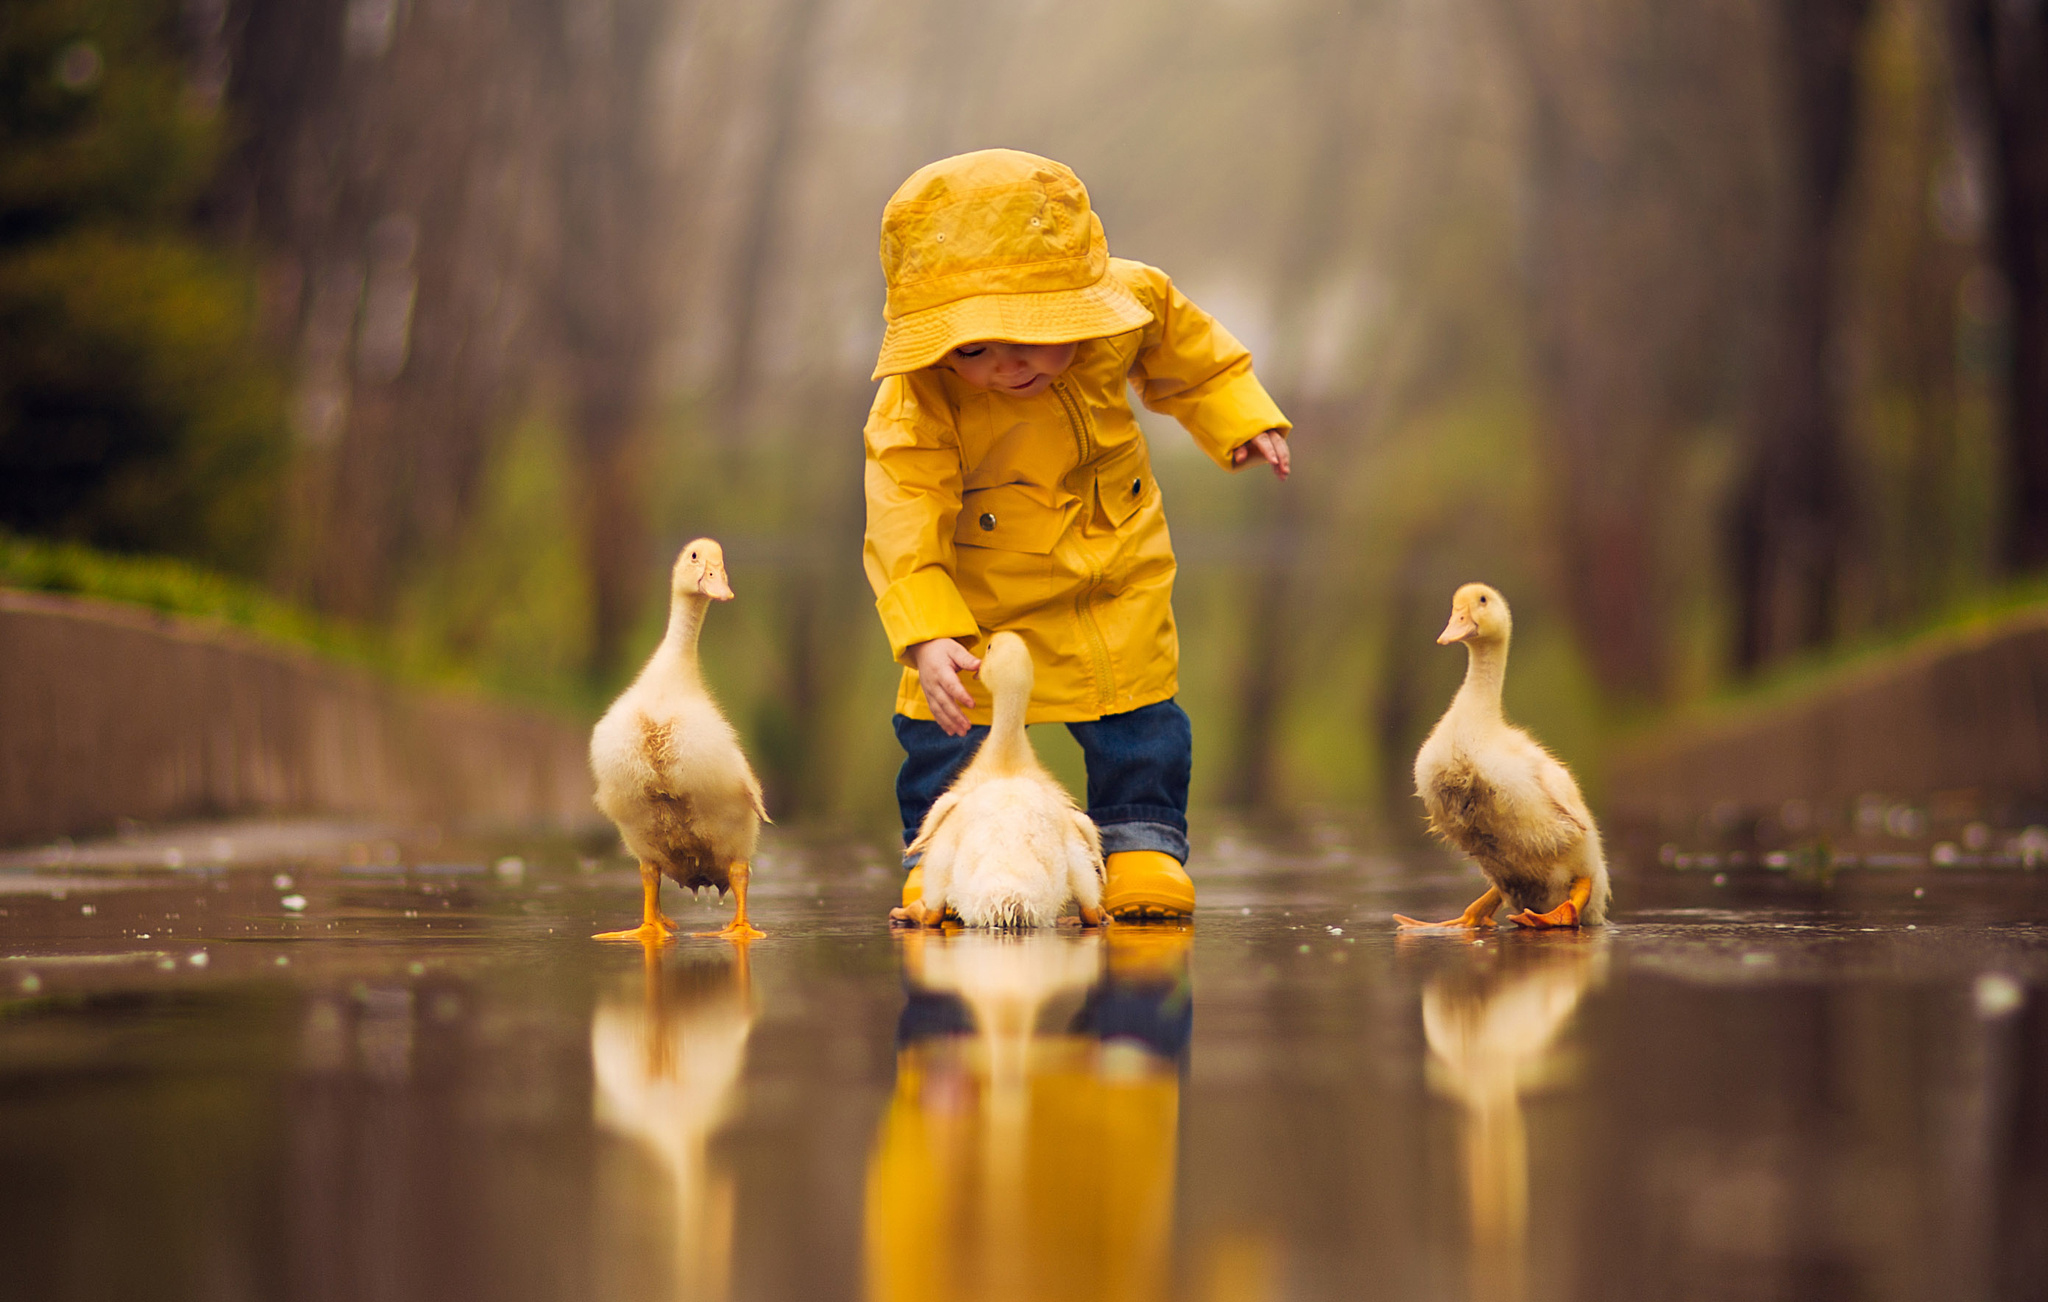 depth of field, cute, photography, bird, child, duck, reflection lock screen backgrounds